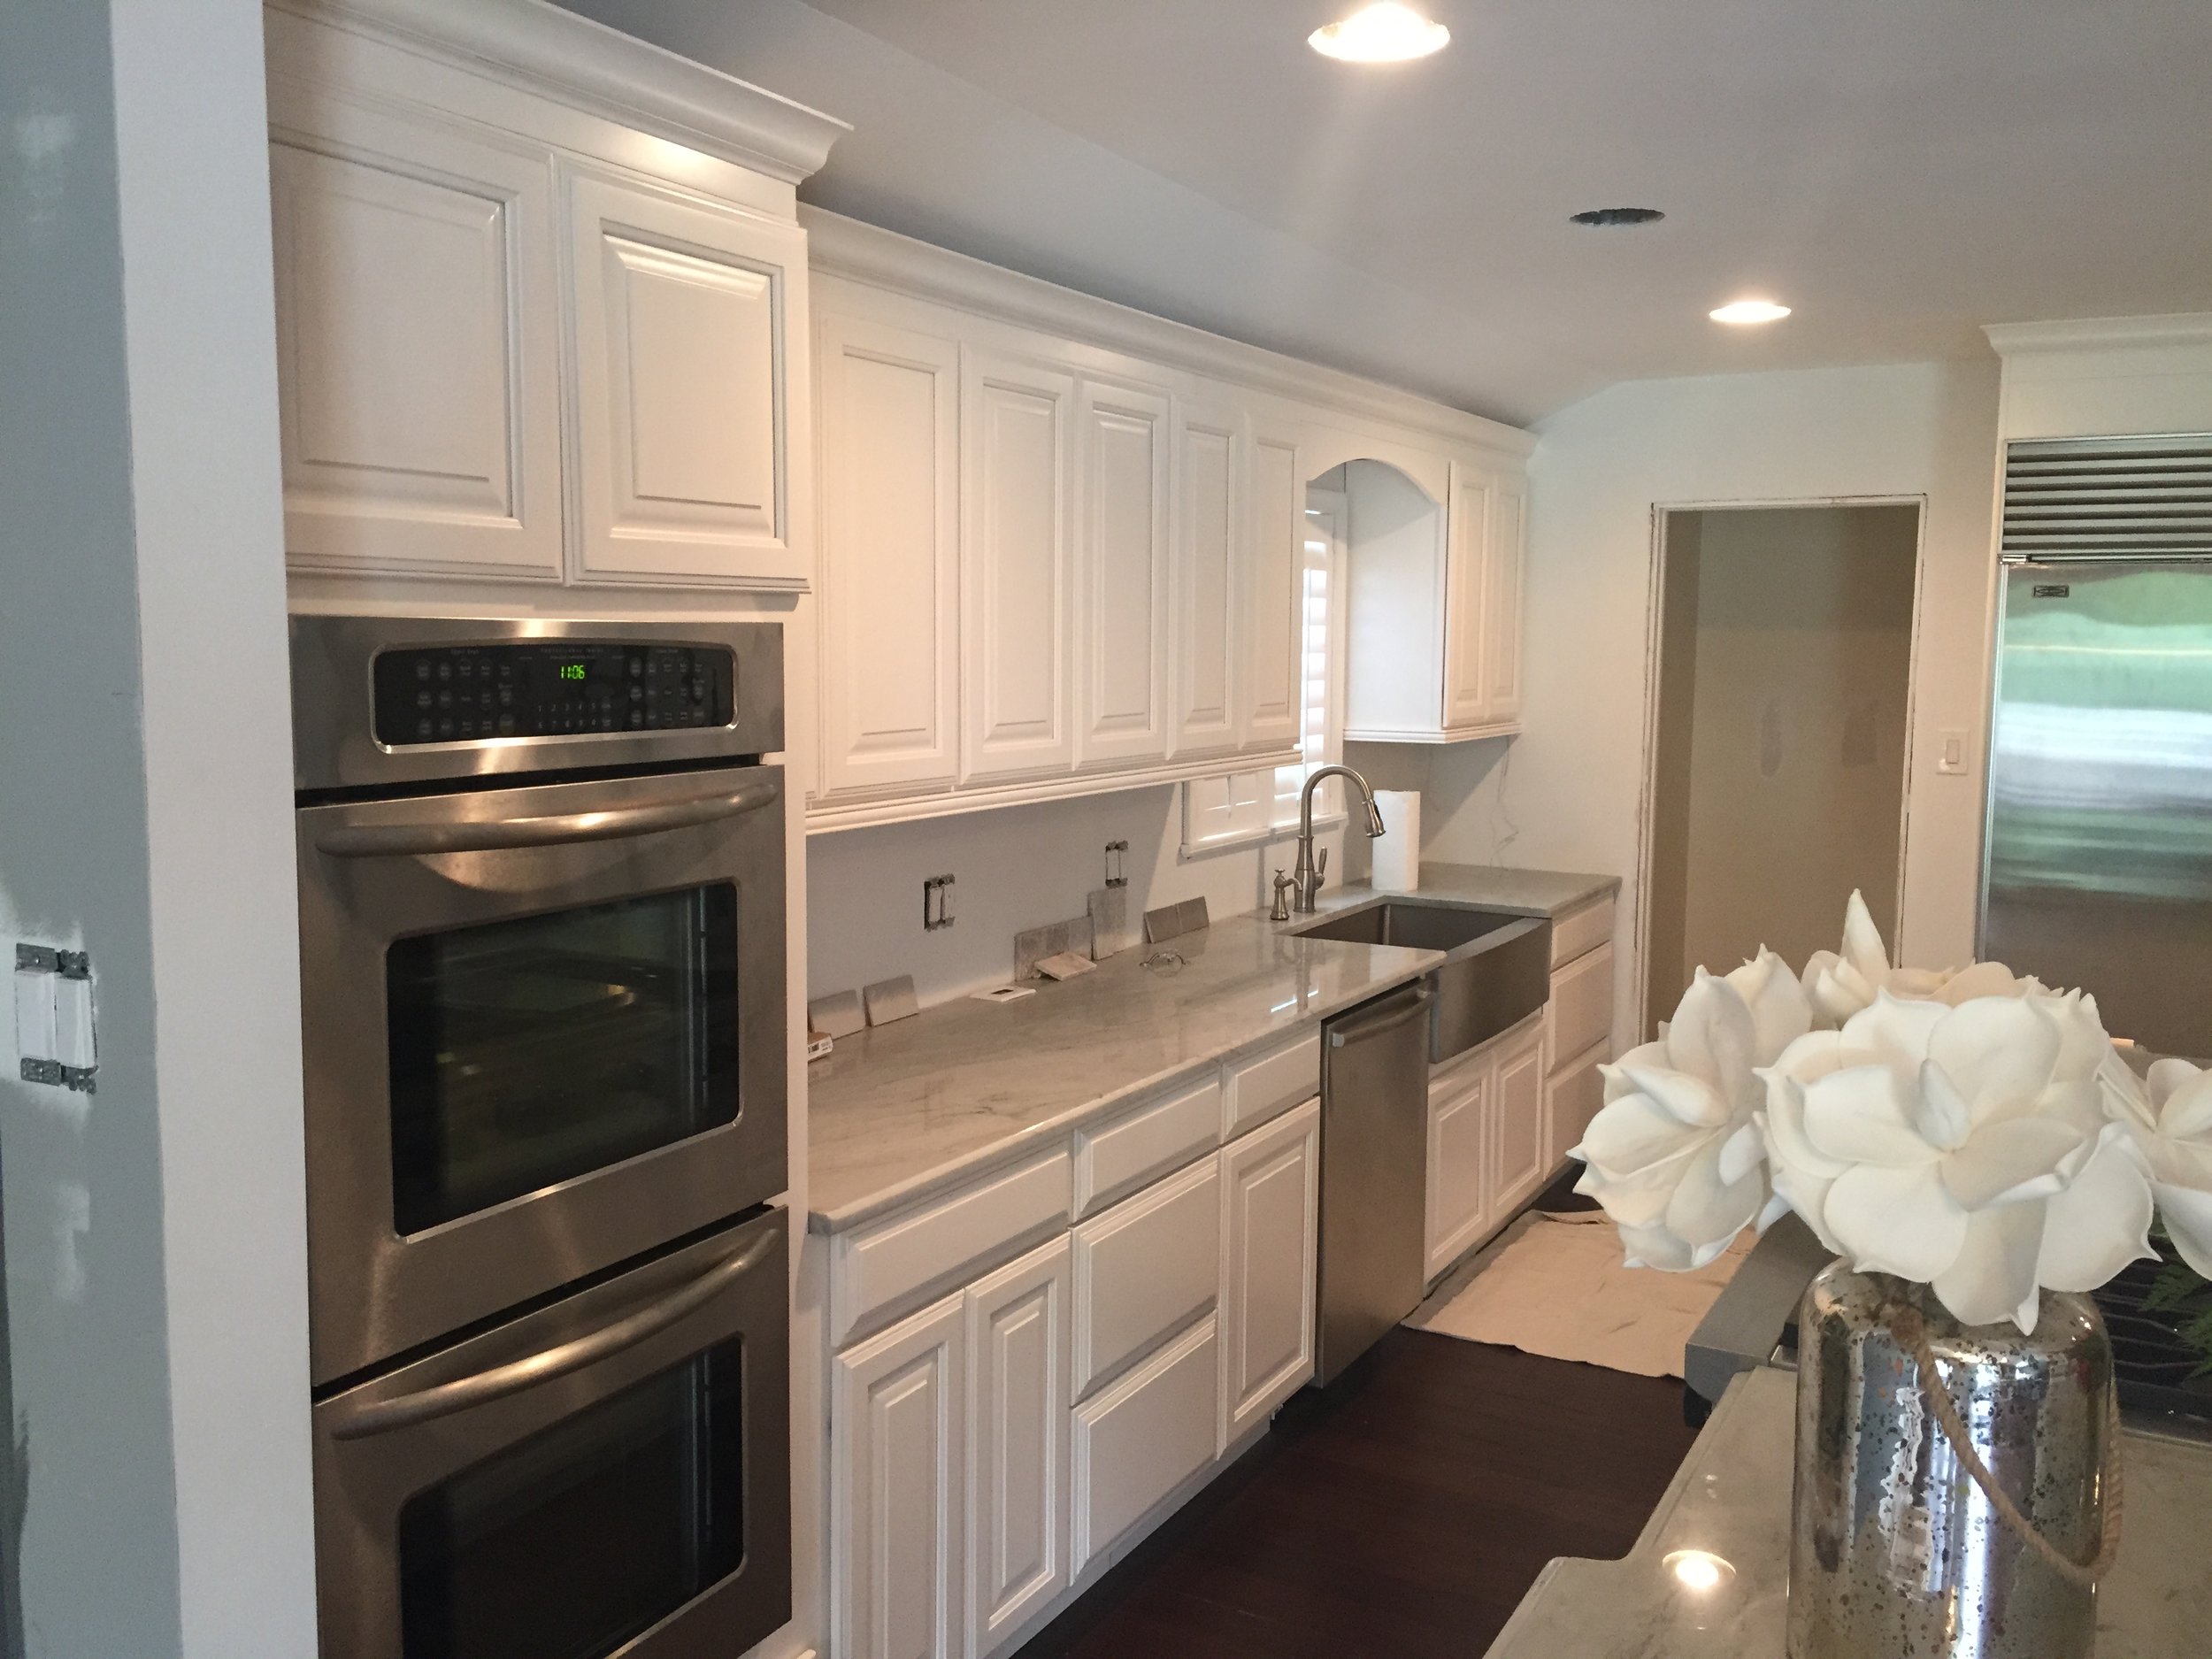 Upscale kitchen remodel in progress -Wilkes Barre, PA